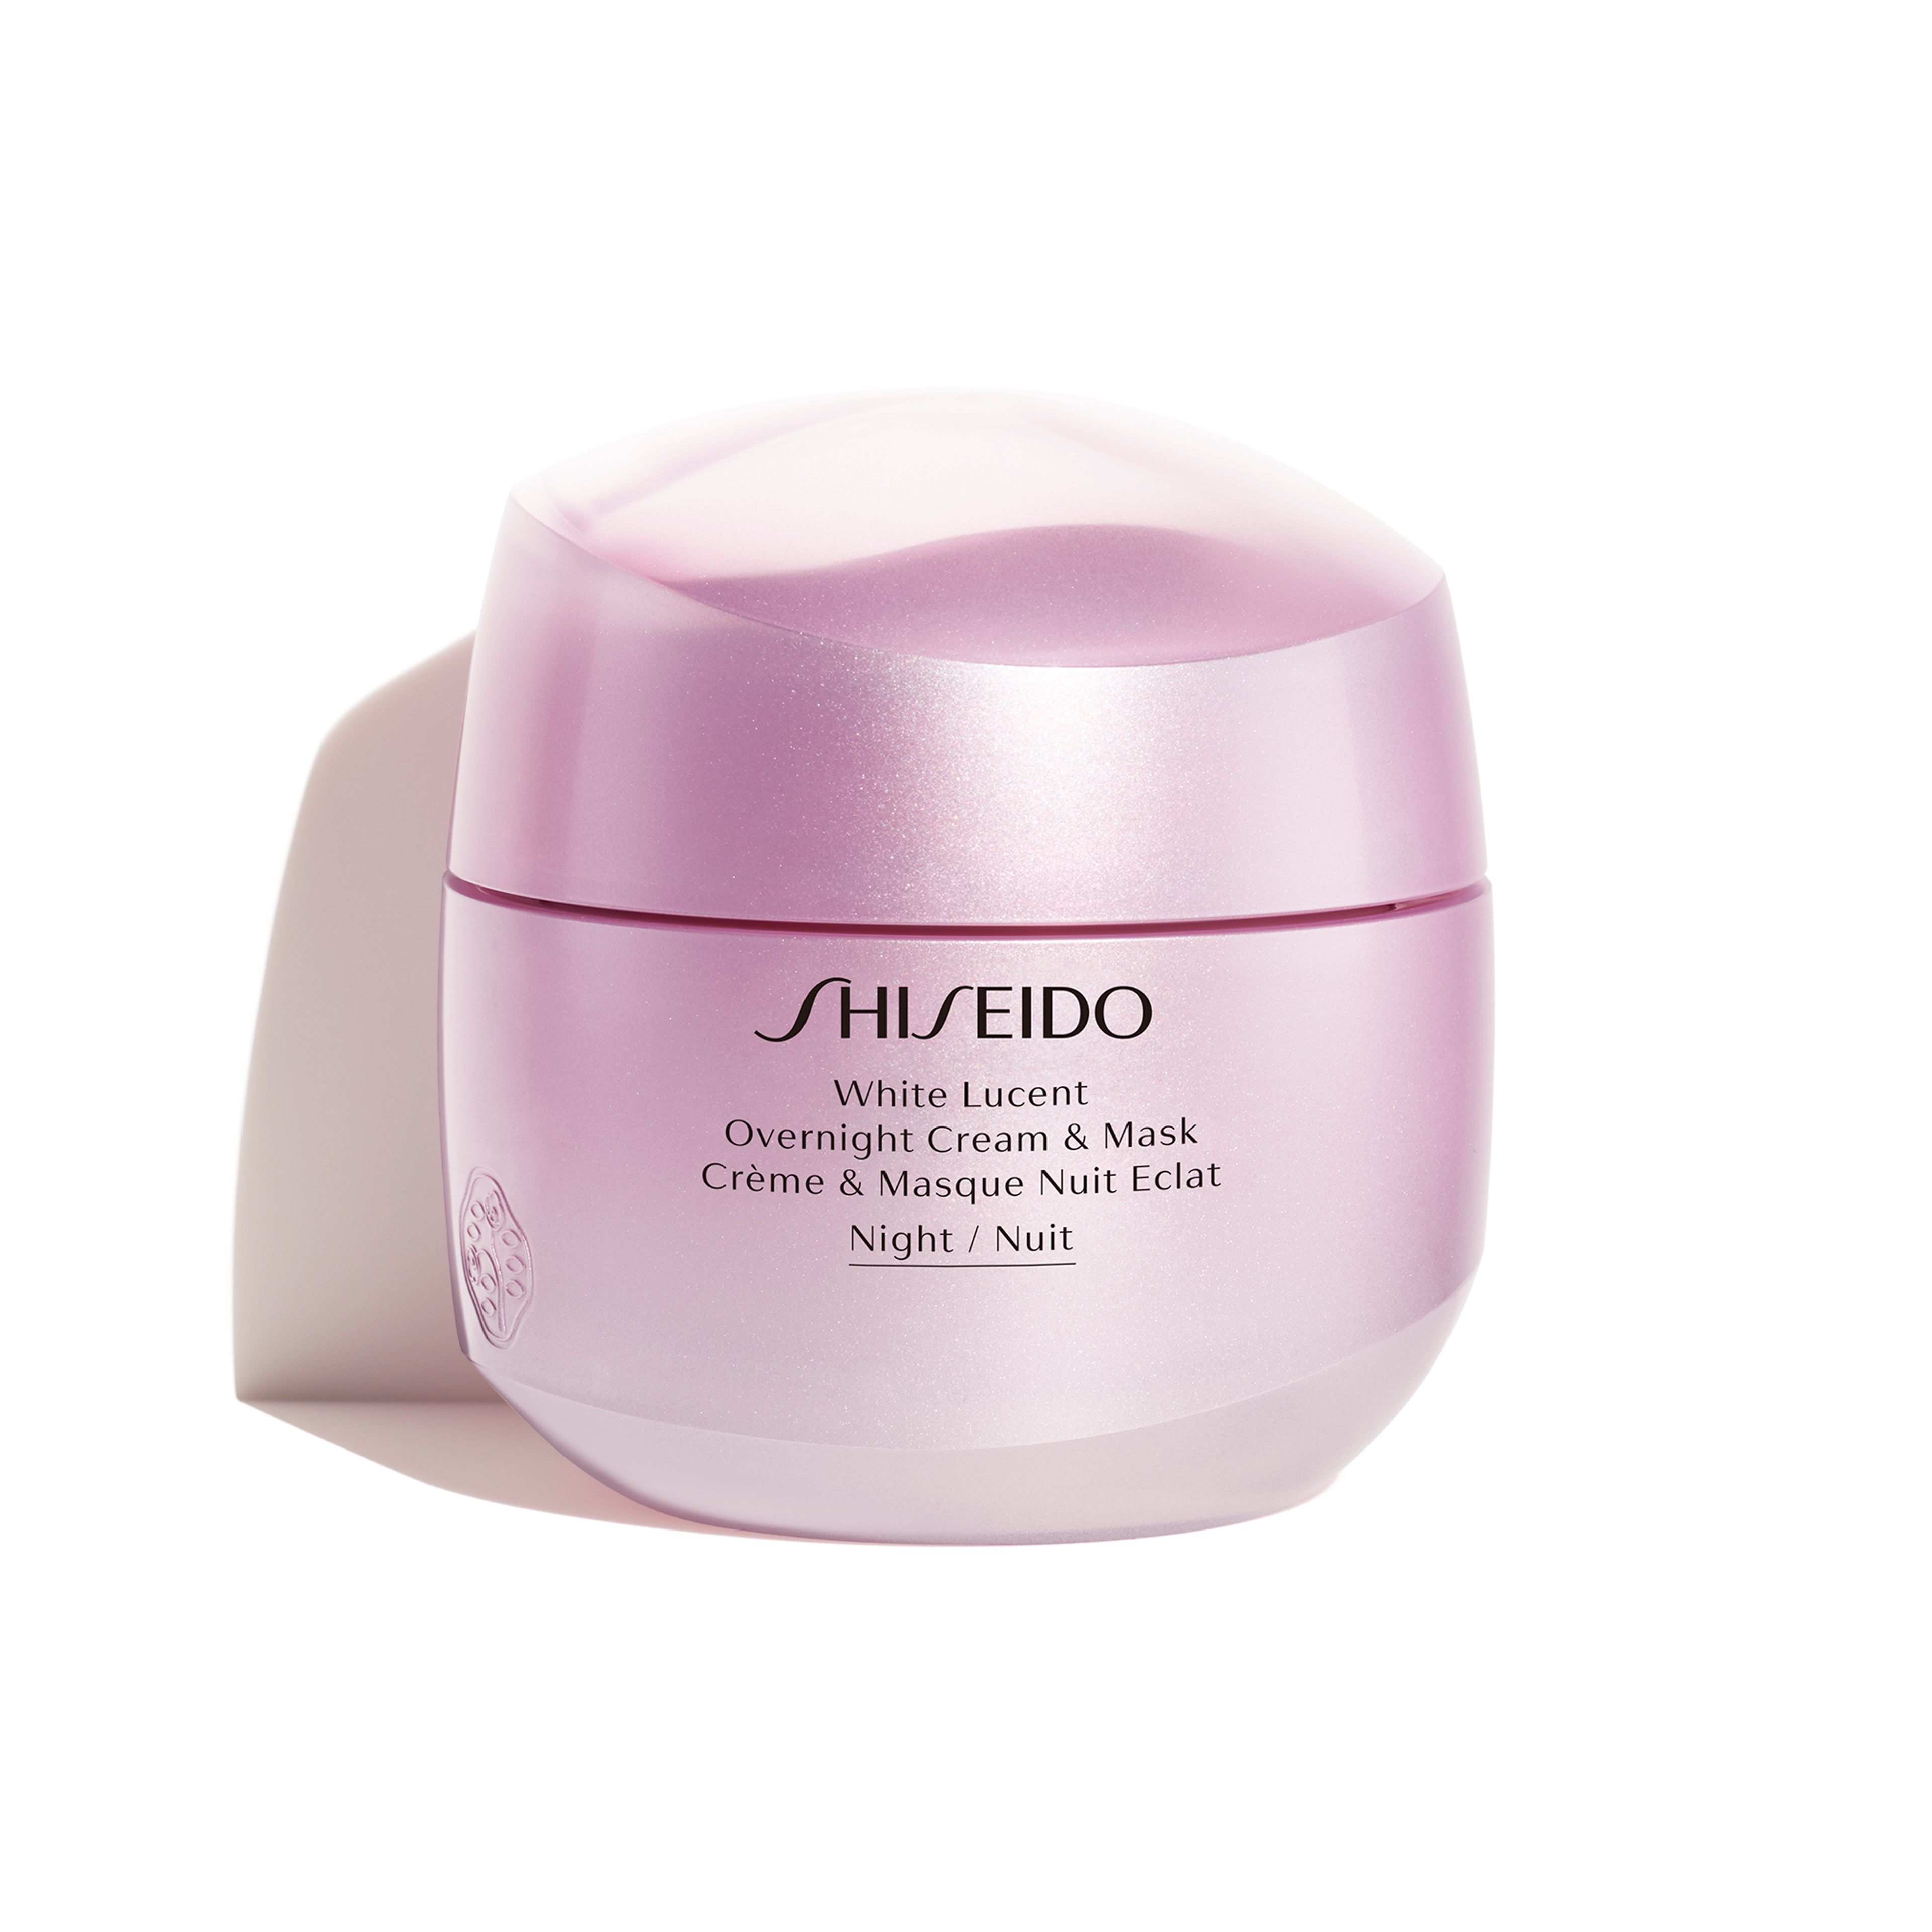 Shiseido Overnight Cream & Mask 1